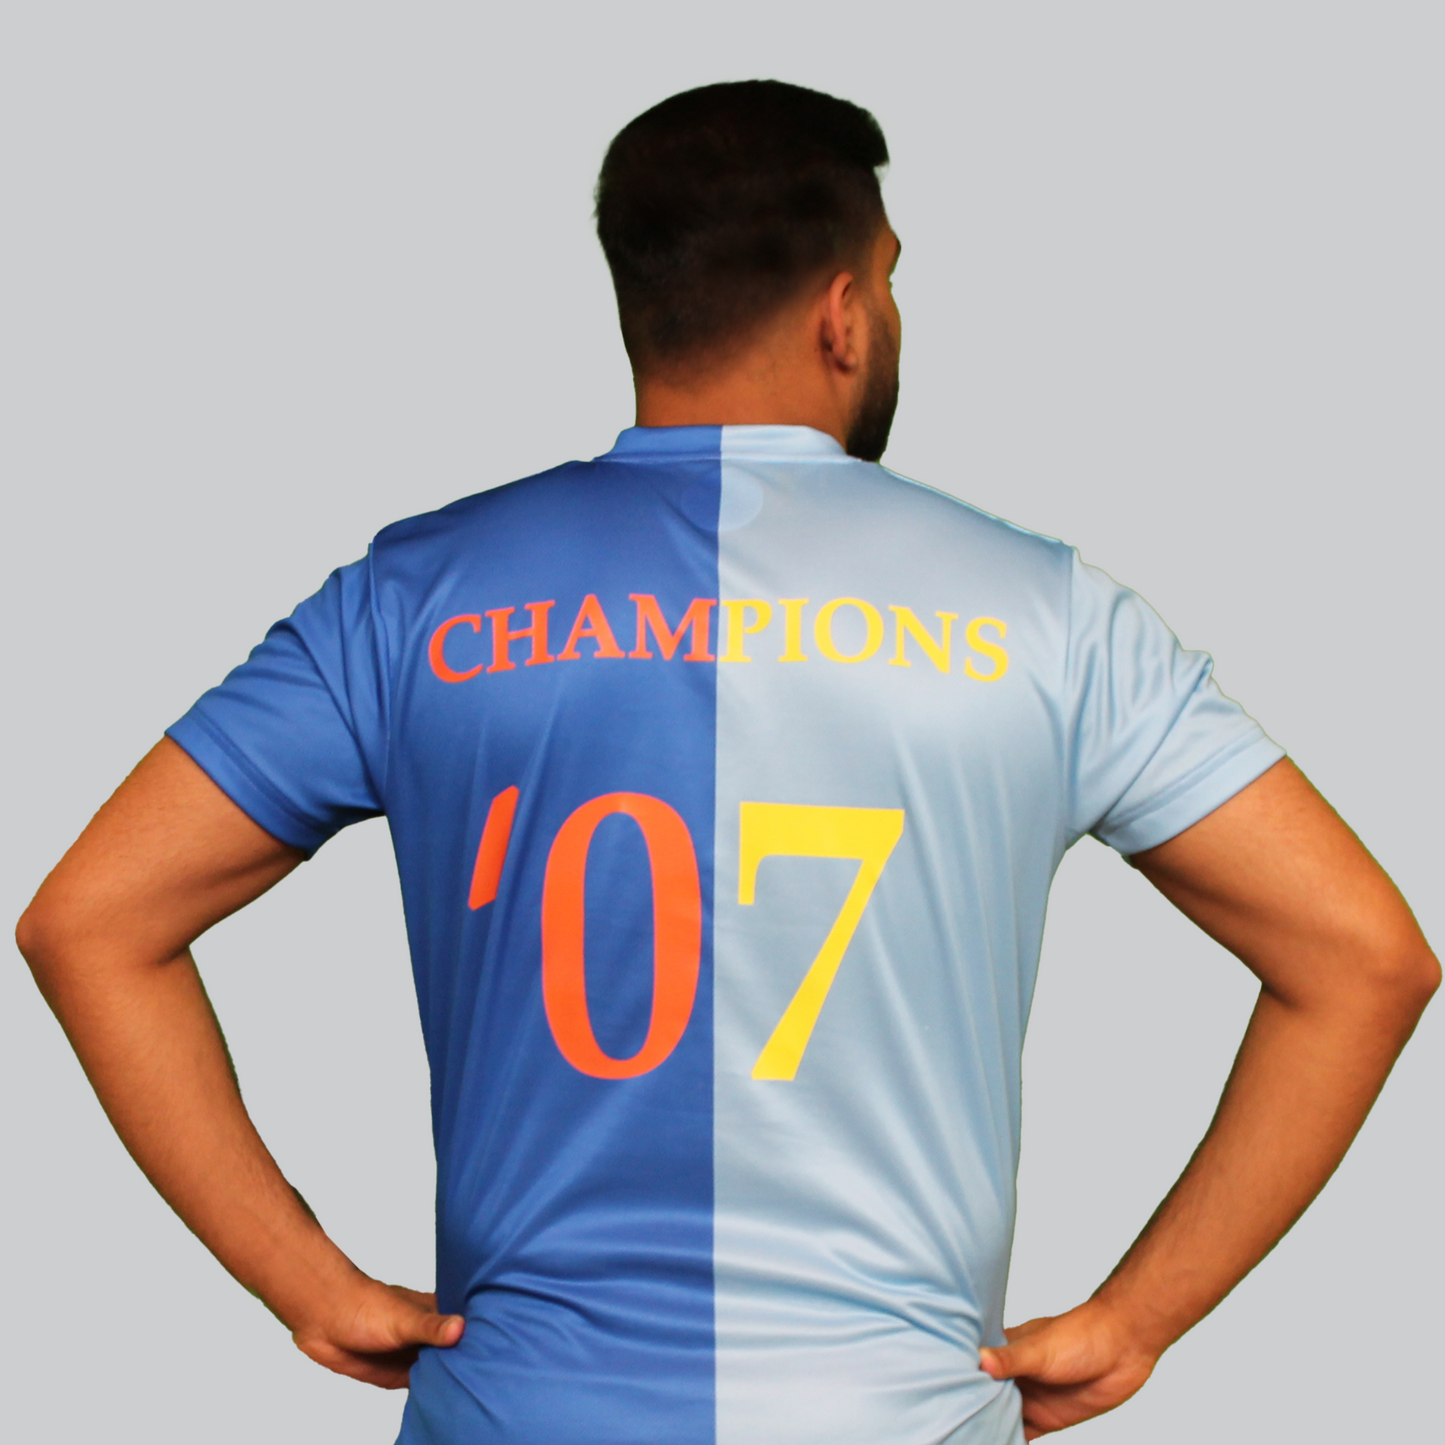 India Cricket Jersey - Champions & Present